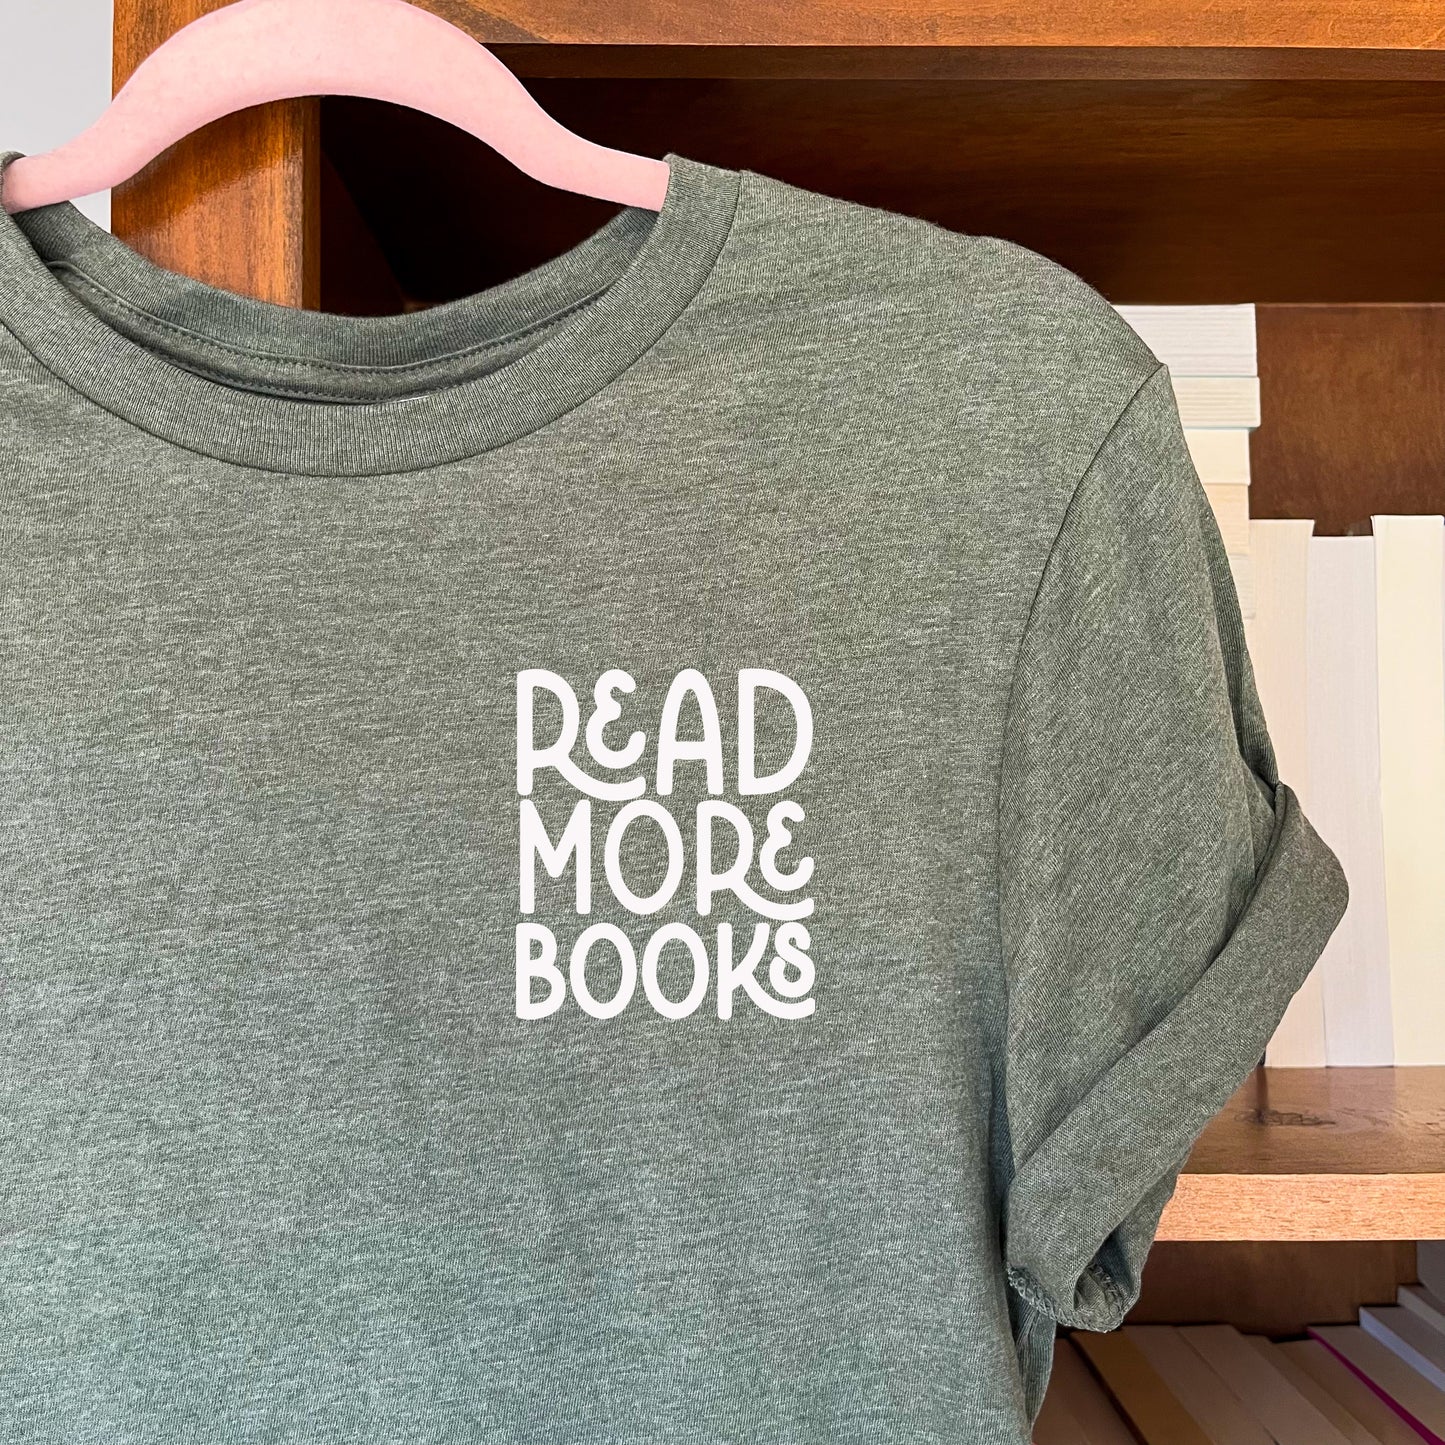 Read More Books T-shirt